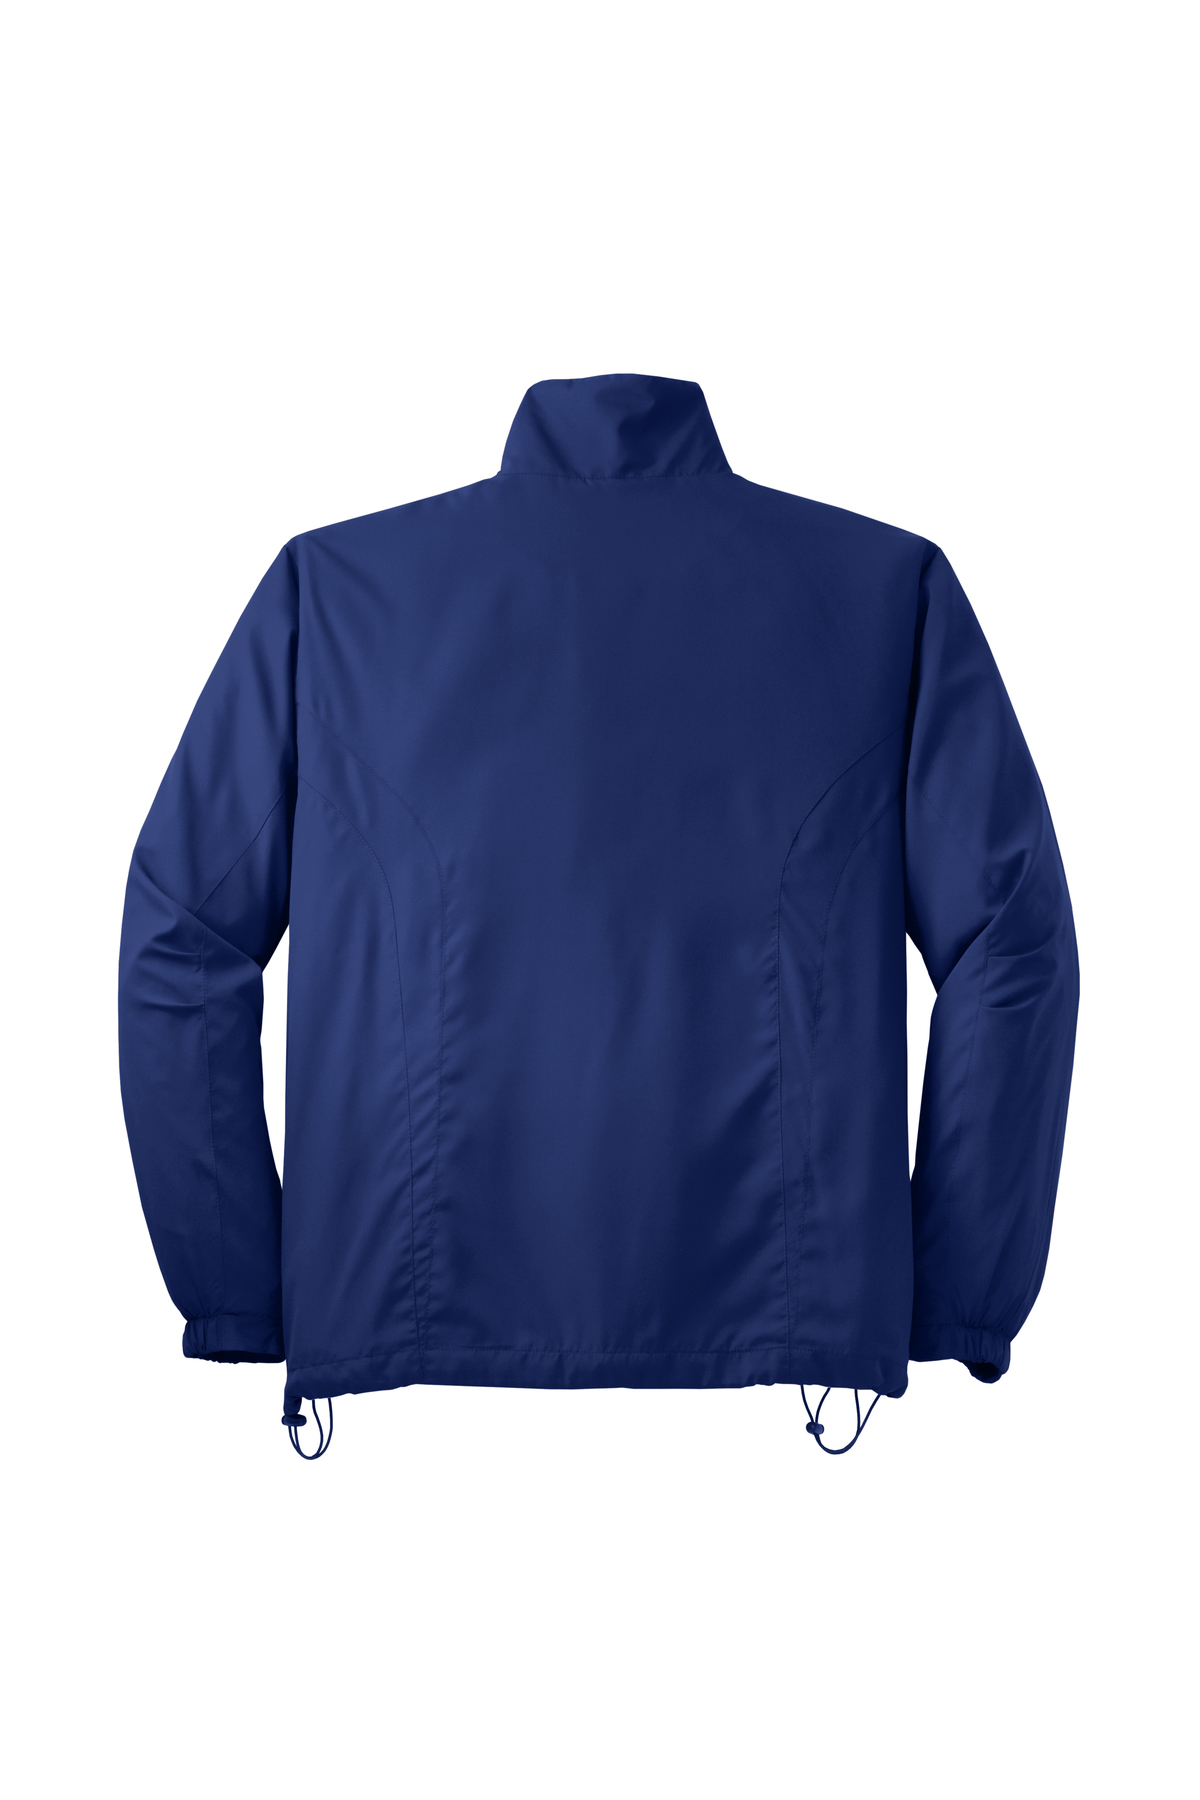 Sport-Tek Full-Zip Wind Jacket | Product | SanMar